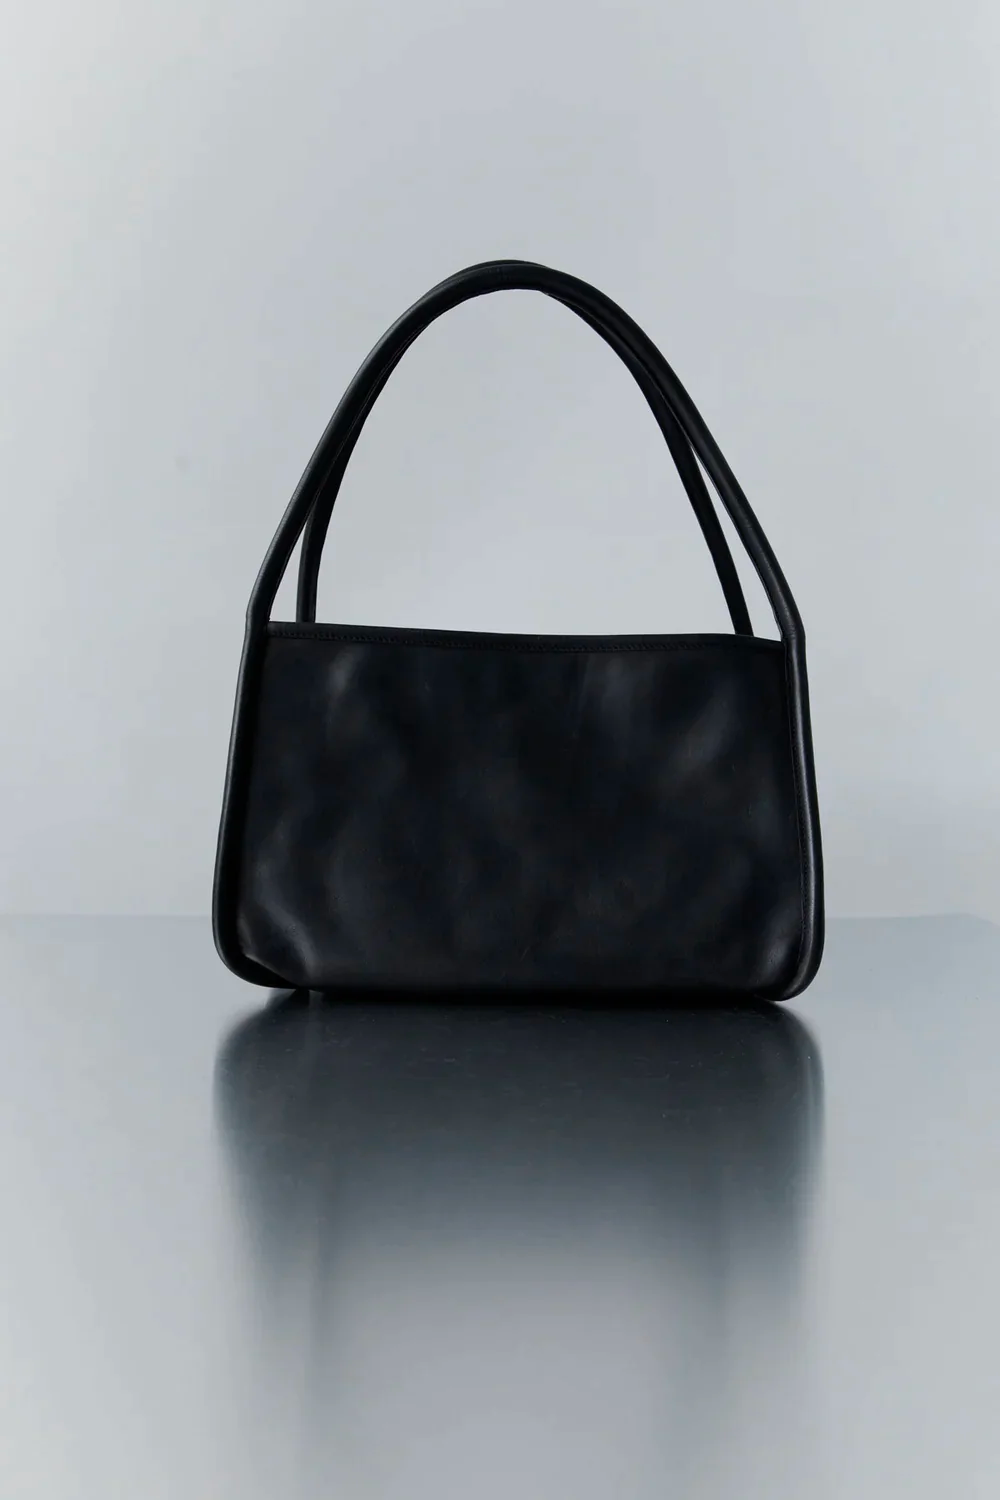 Product Image for Arc Mini Tote Bag, Black